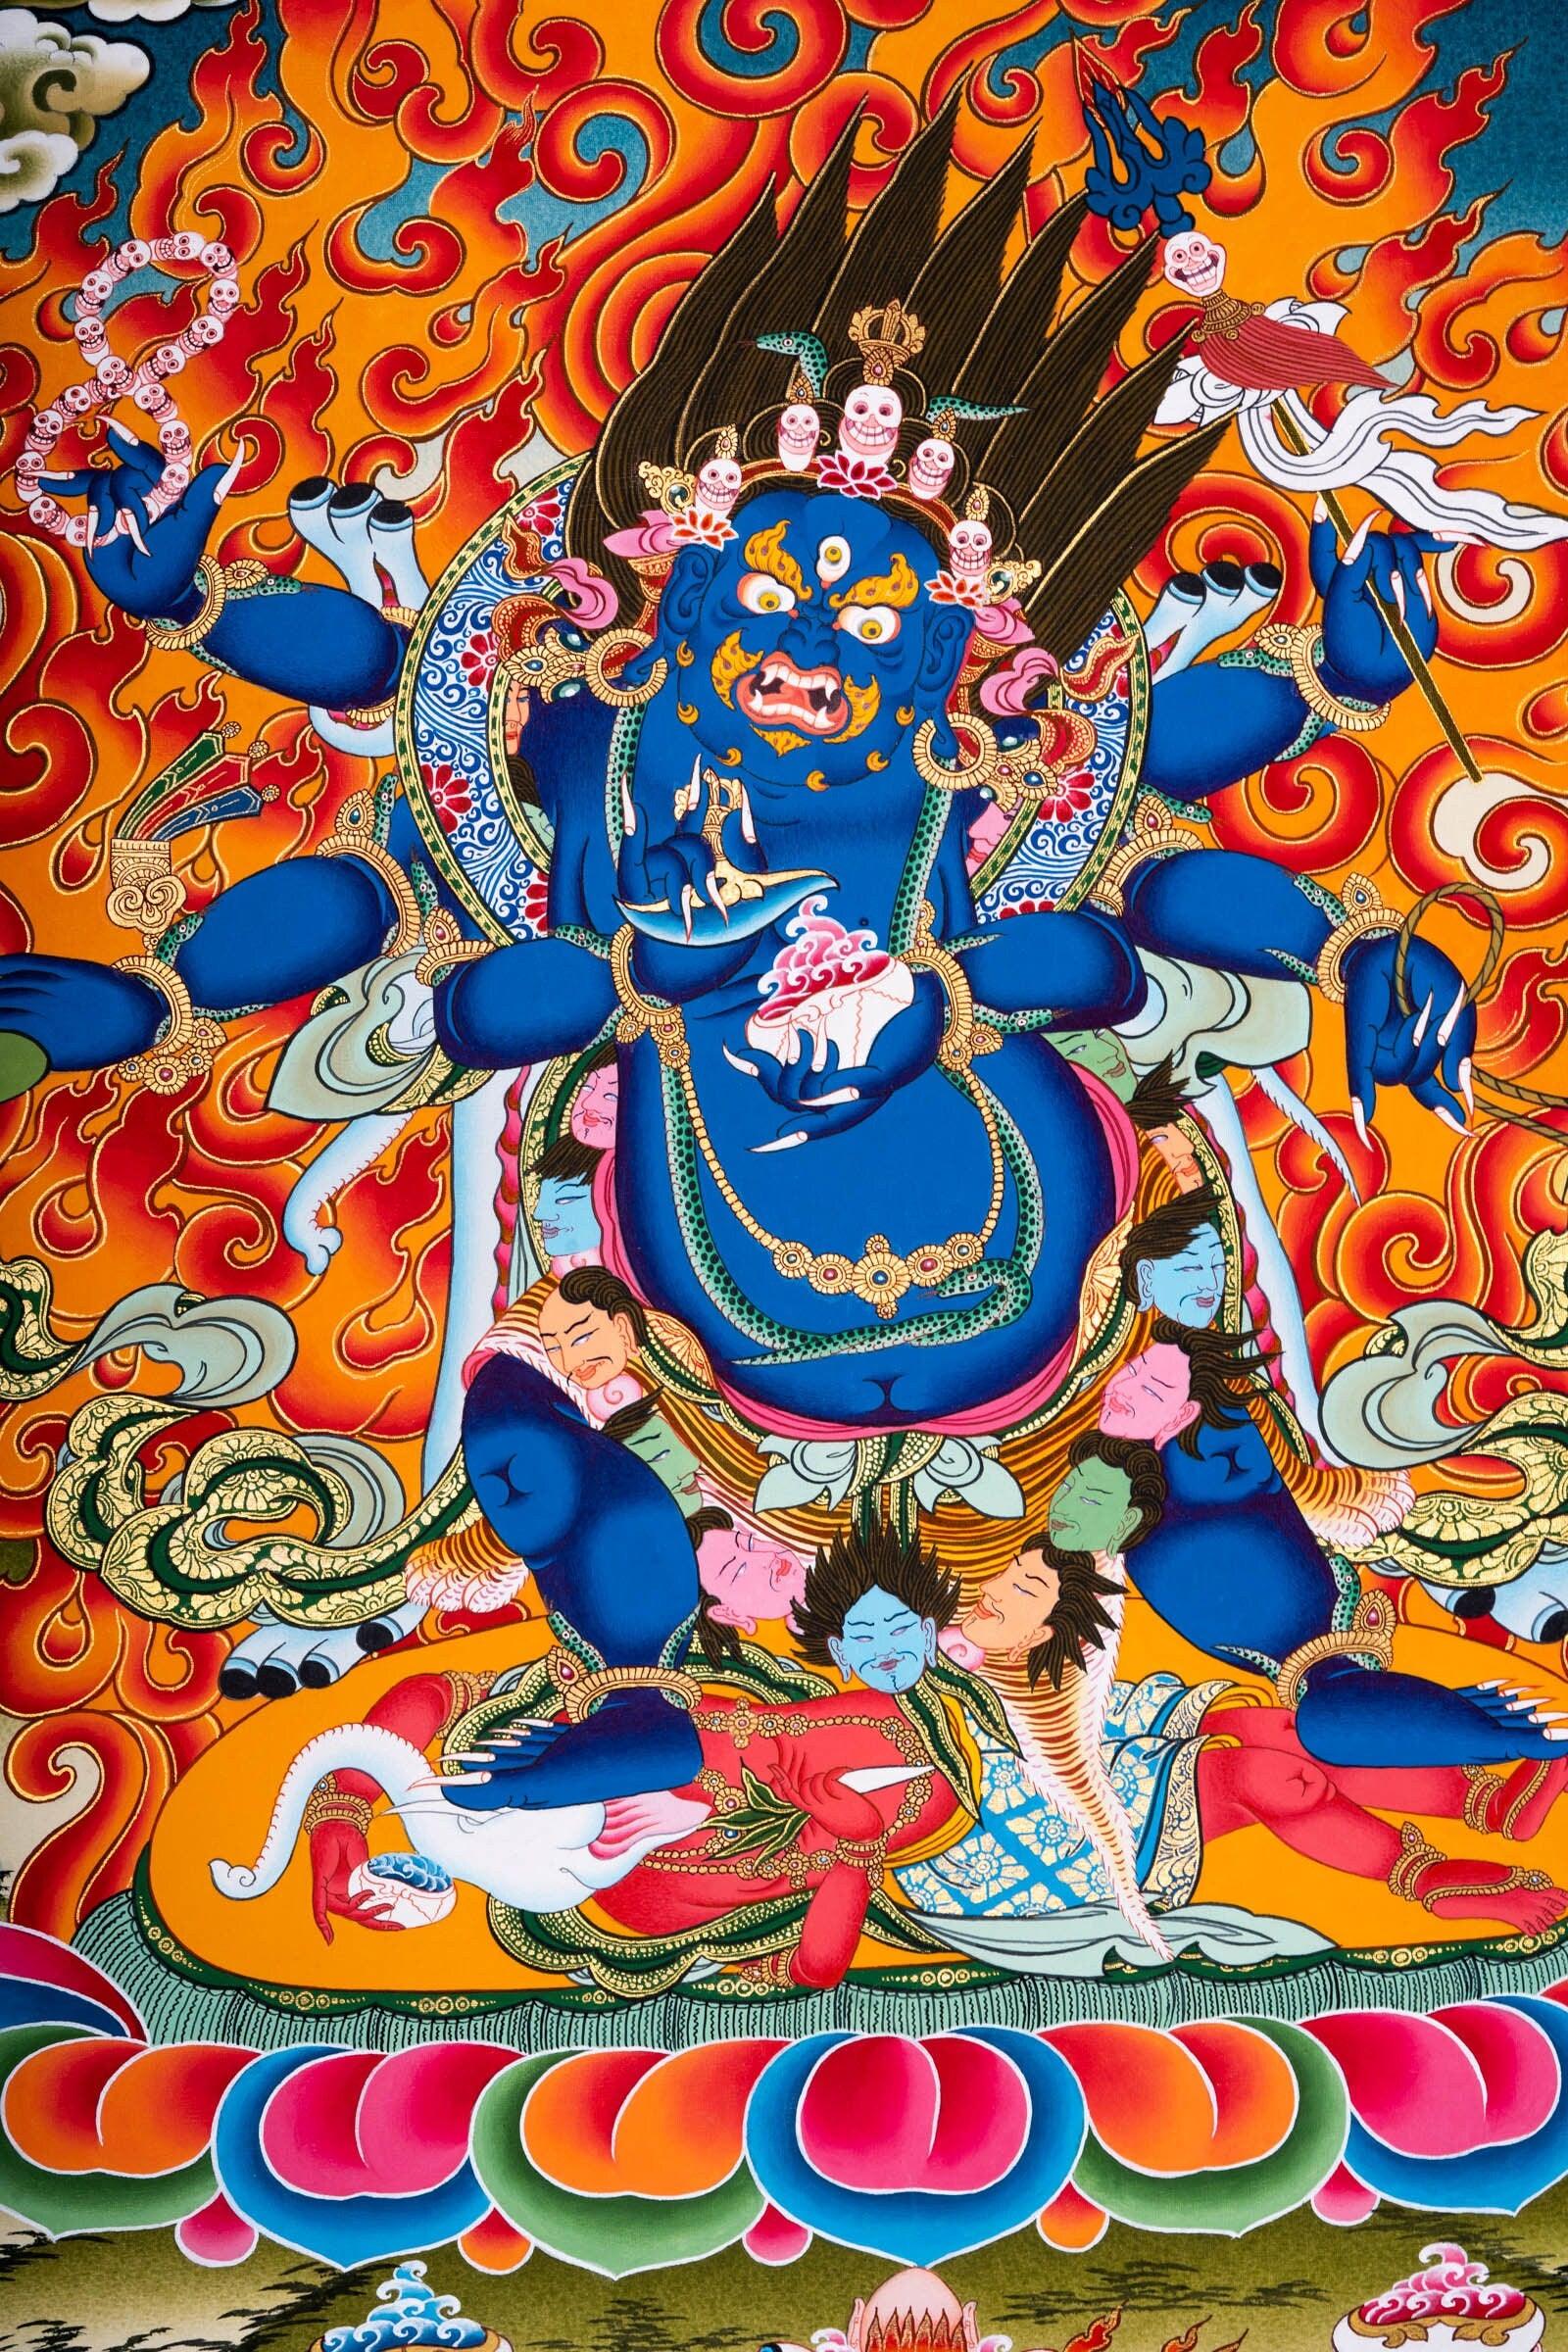 Mahakala with 6 Arm Thangka Painting